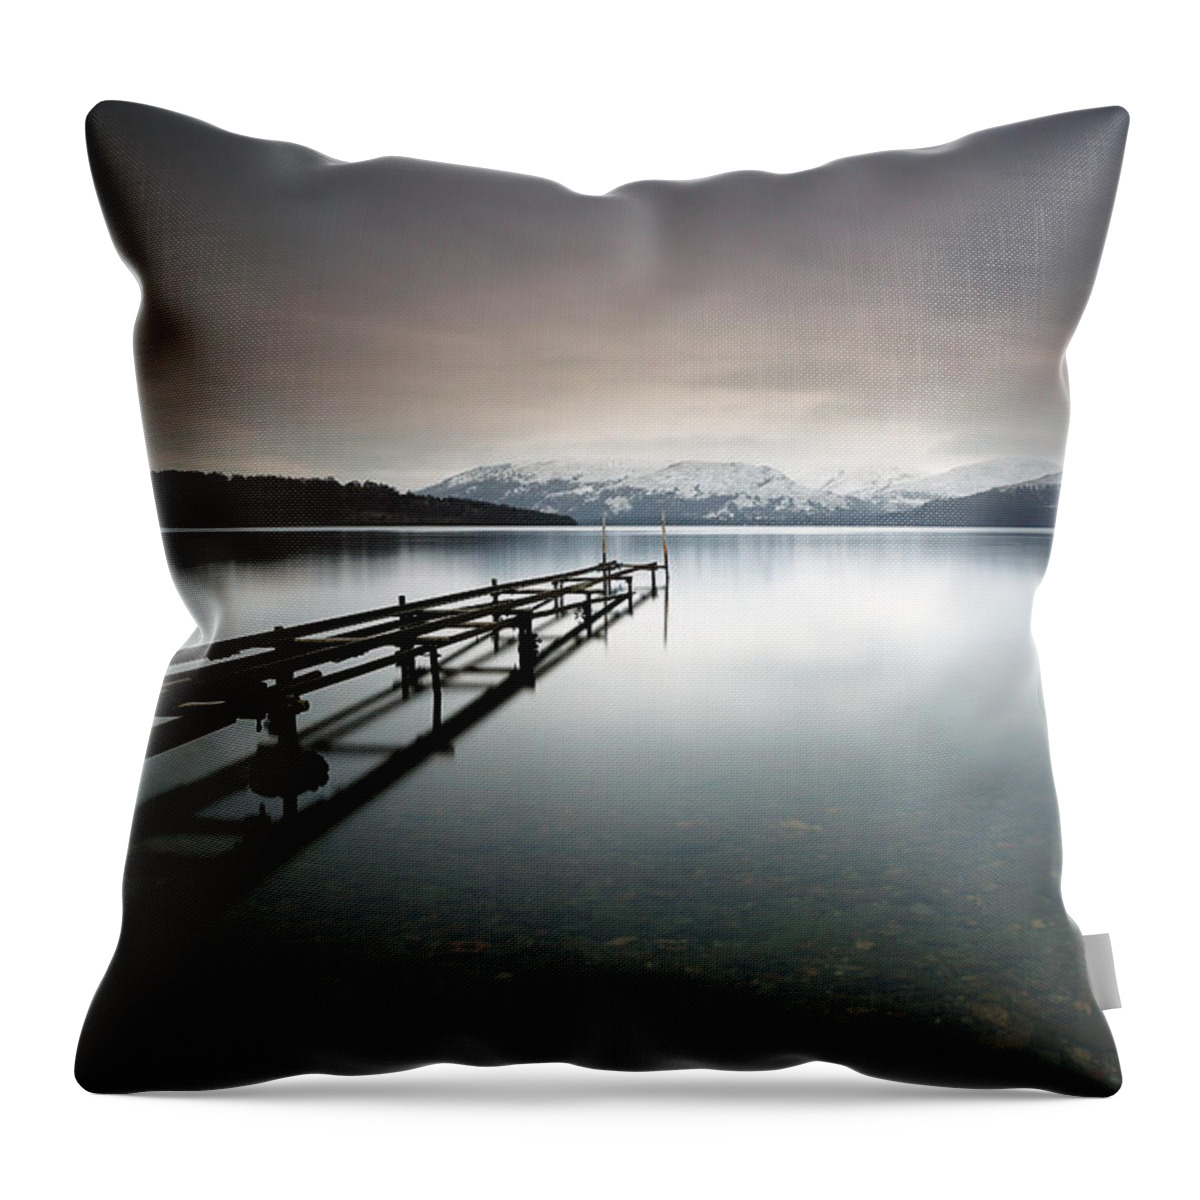 Loch Lomond Throw Pillow featuring the photograph Loch Lomond #5 by Grant Glendinning